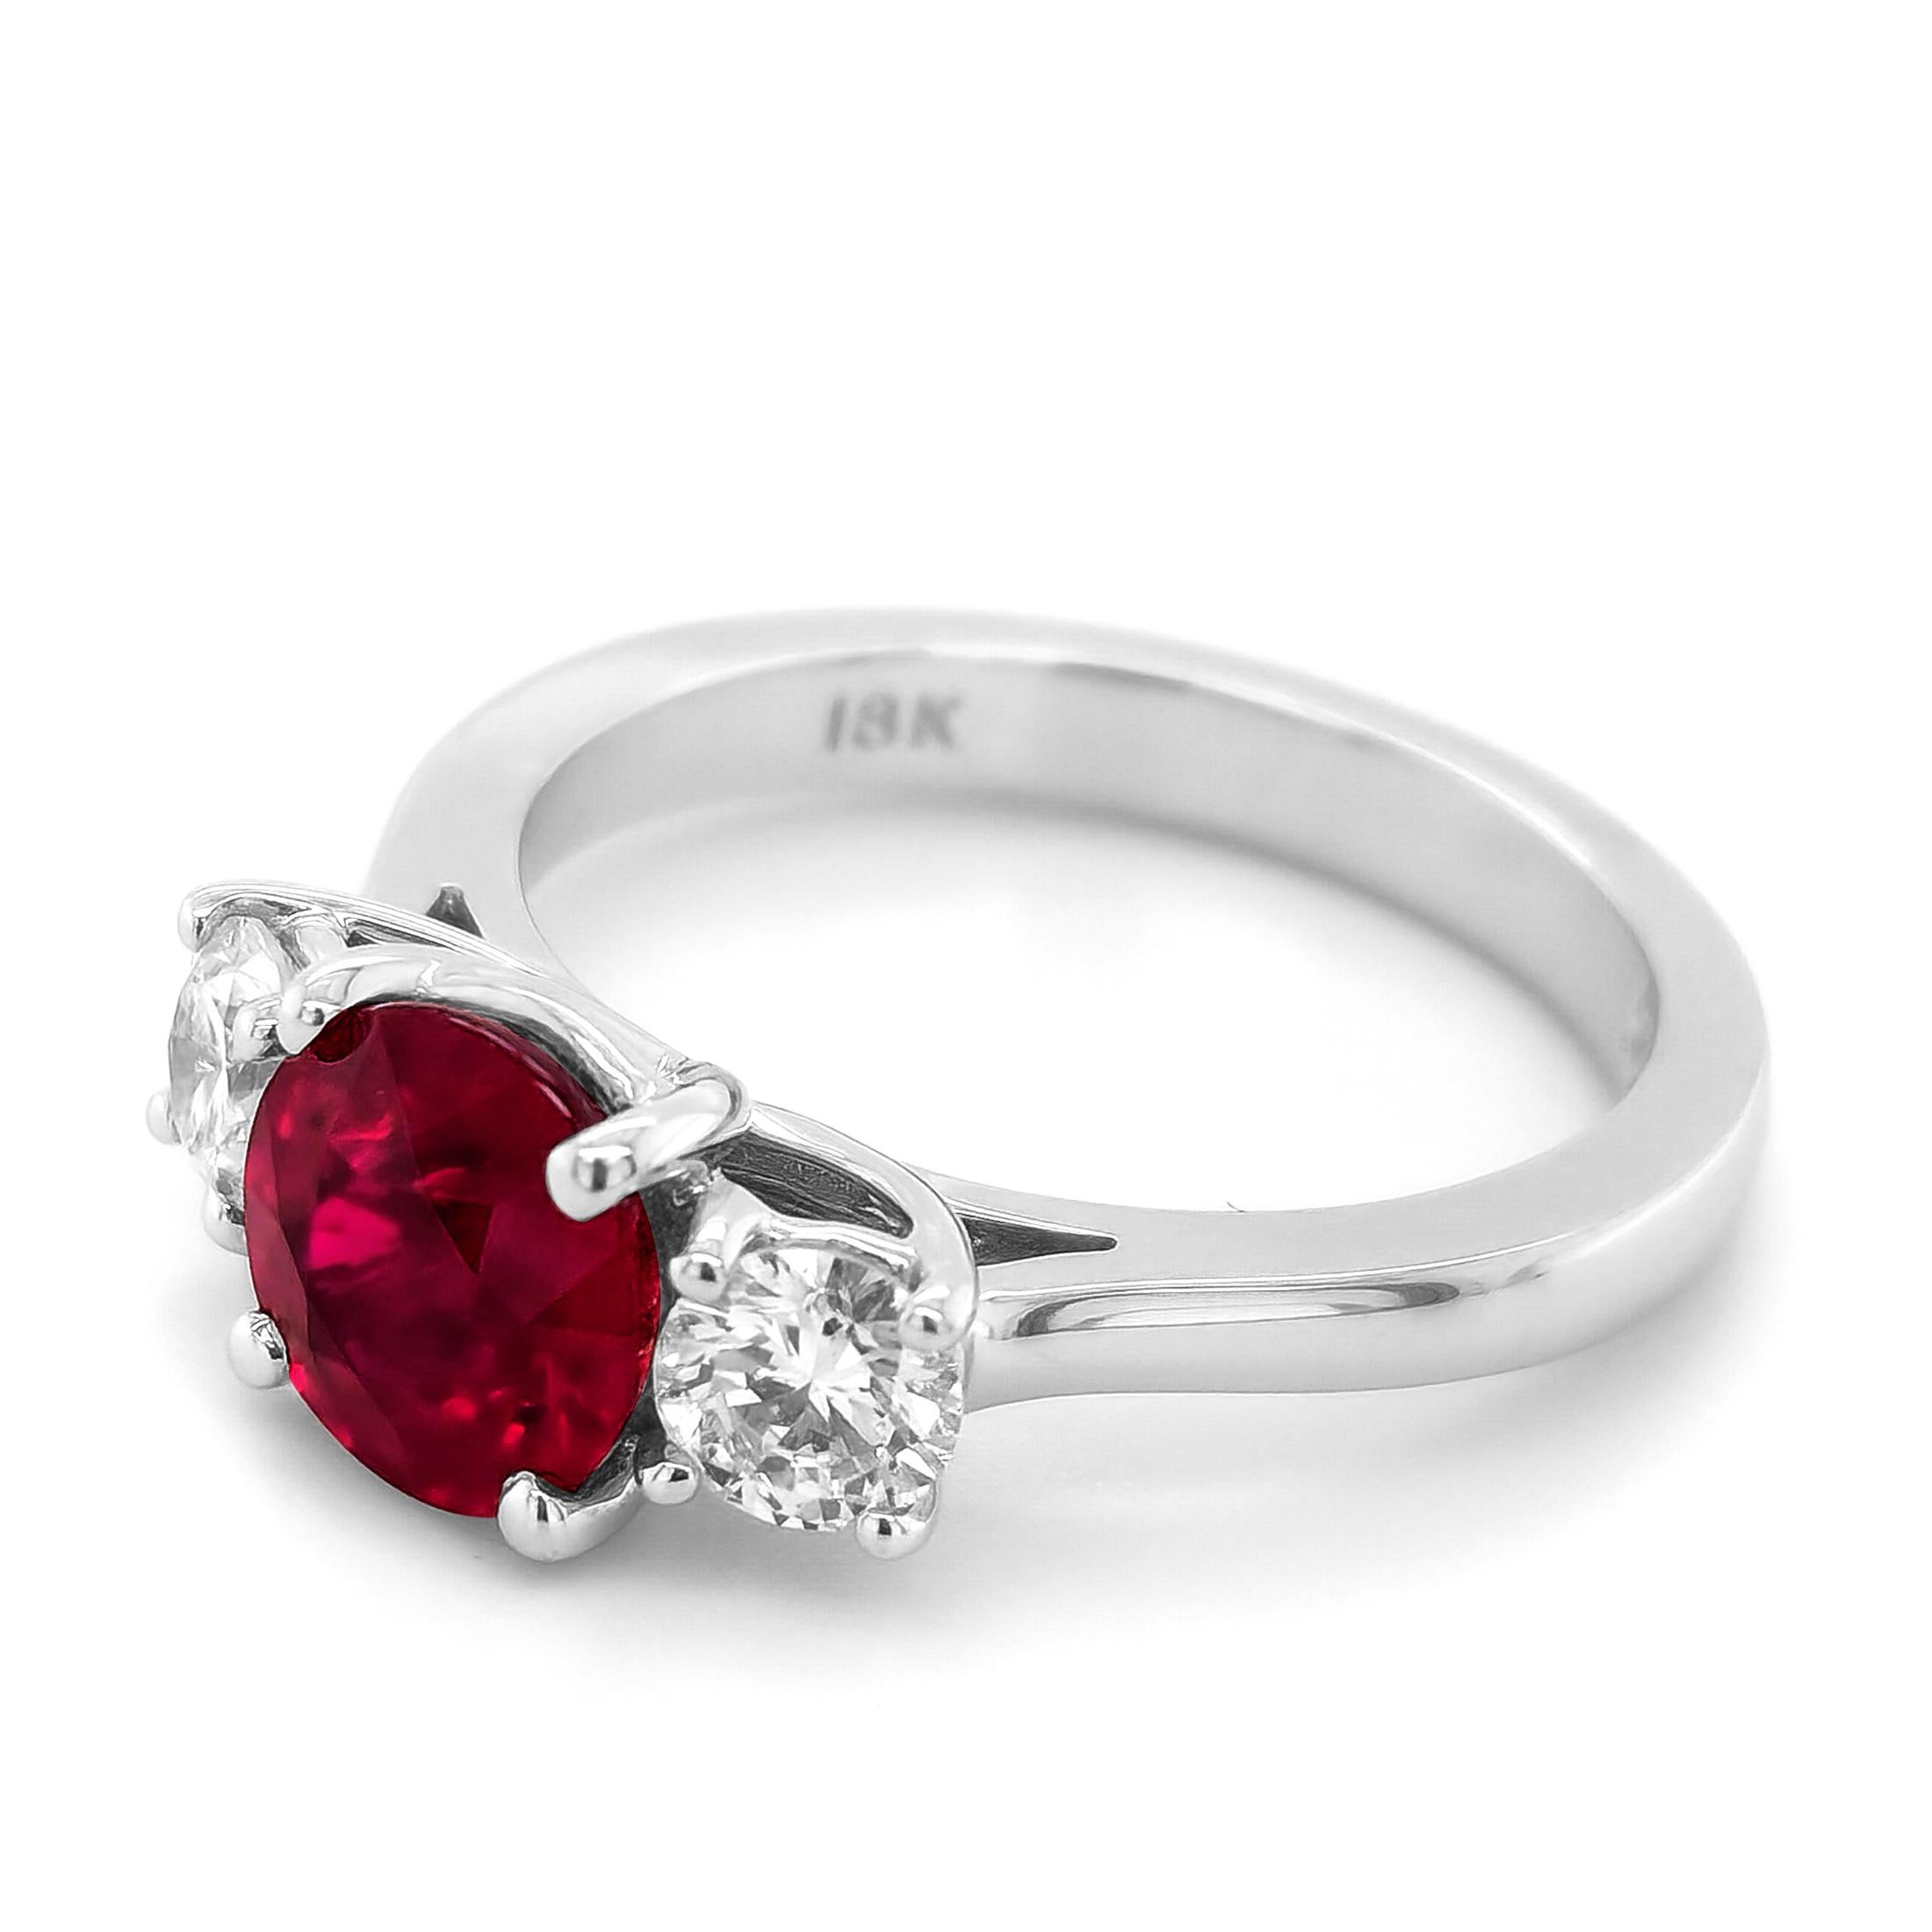 Mixed Cut GIA Certified 1.81 Carats Burma Ruby Diamonds set in 18K White Gold Ring For Sale